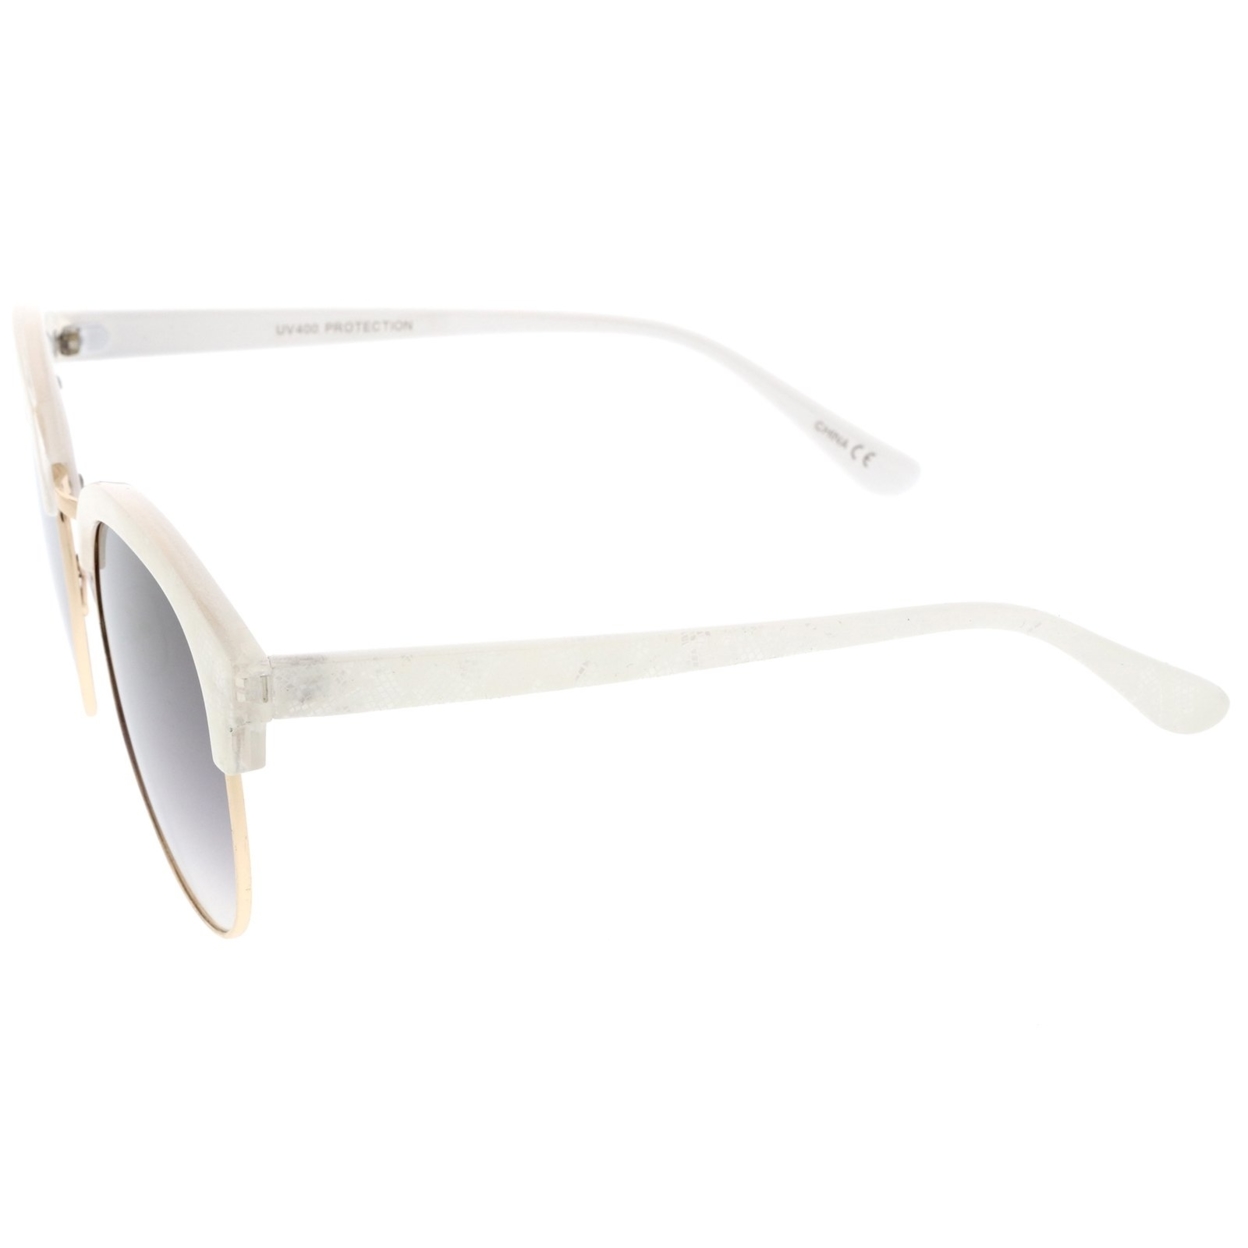 Oversize Metallic Horn Rimmed Colored Mirror Lens Half-Frame Sunglasses 58mm - White Gold / Lavender Mirror